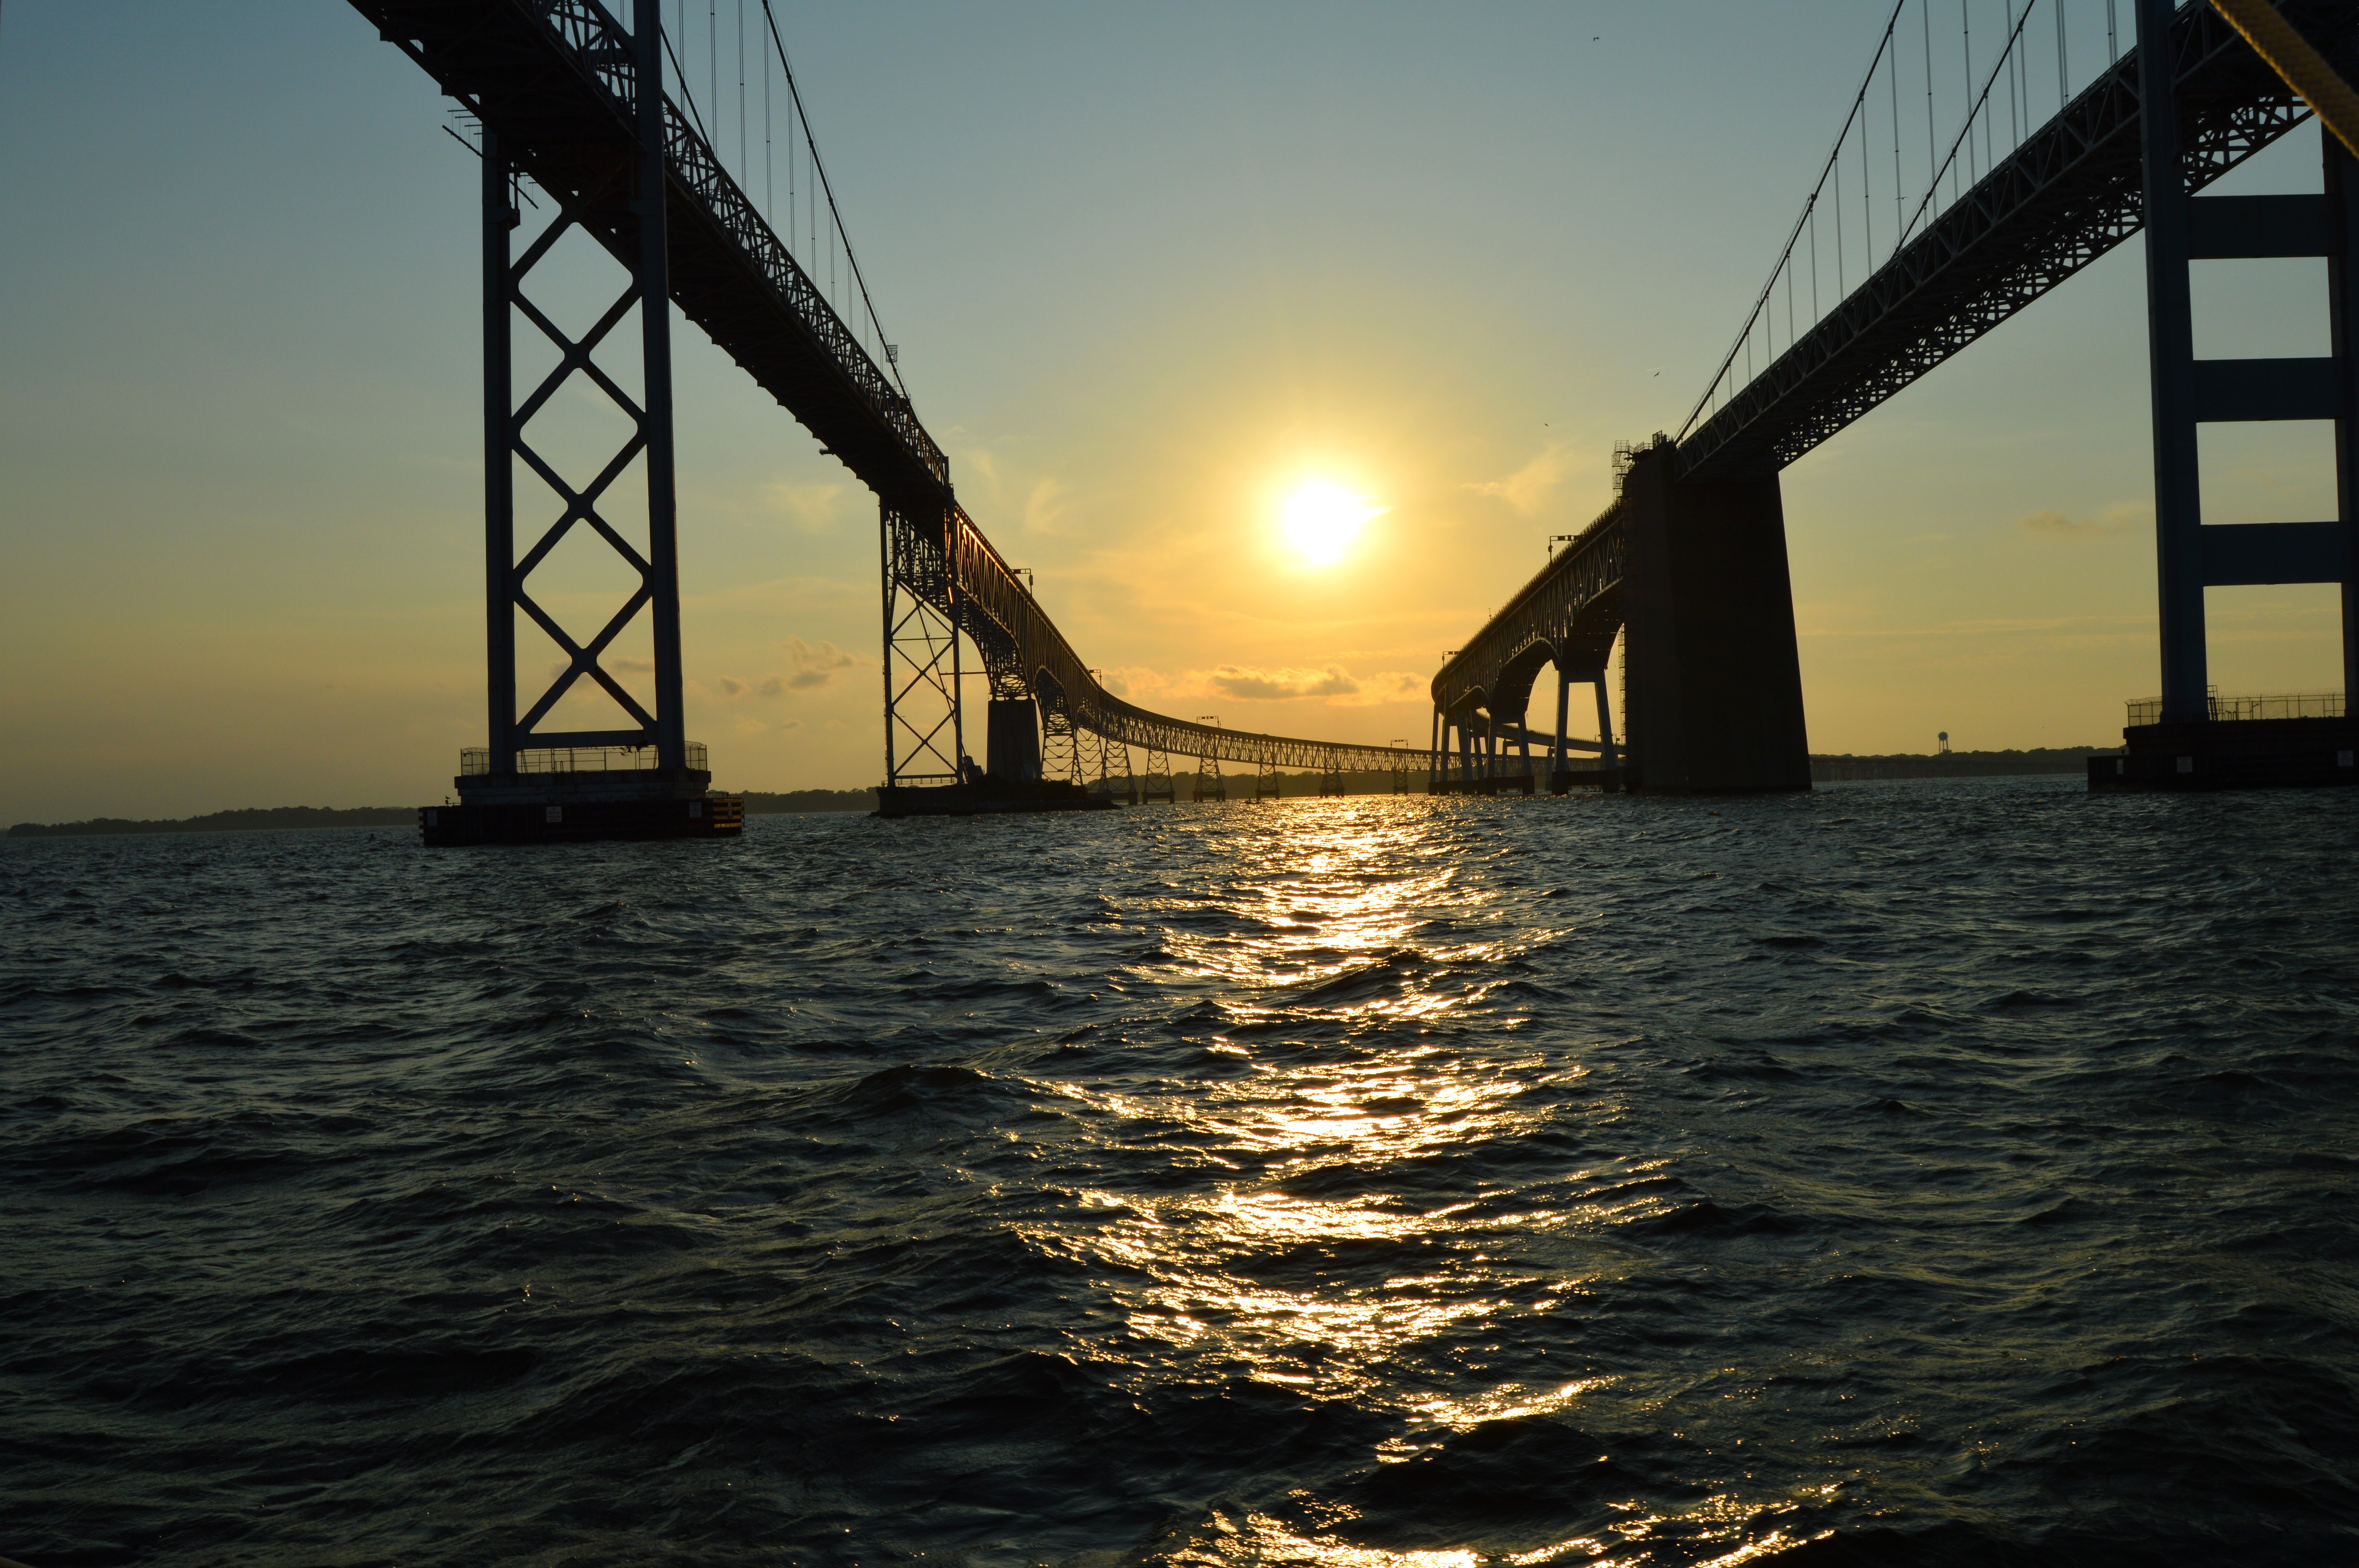 Sailing under the Bay Bridge at sunset